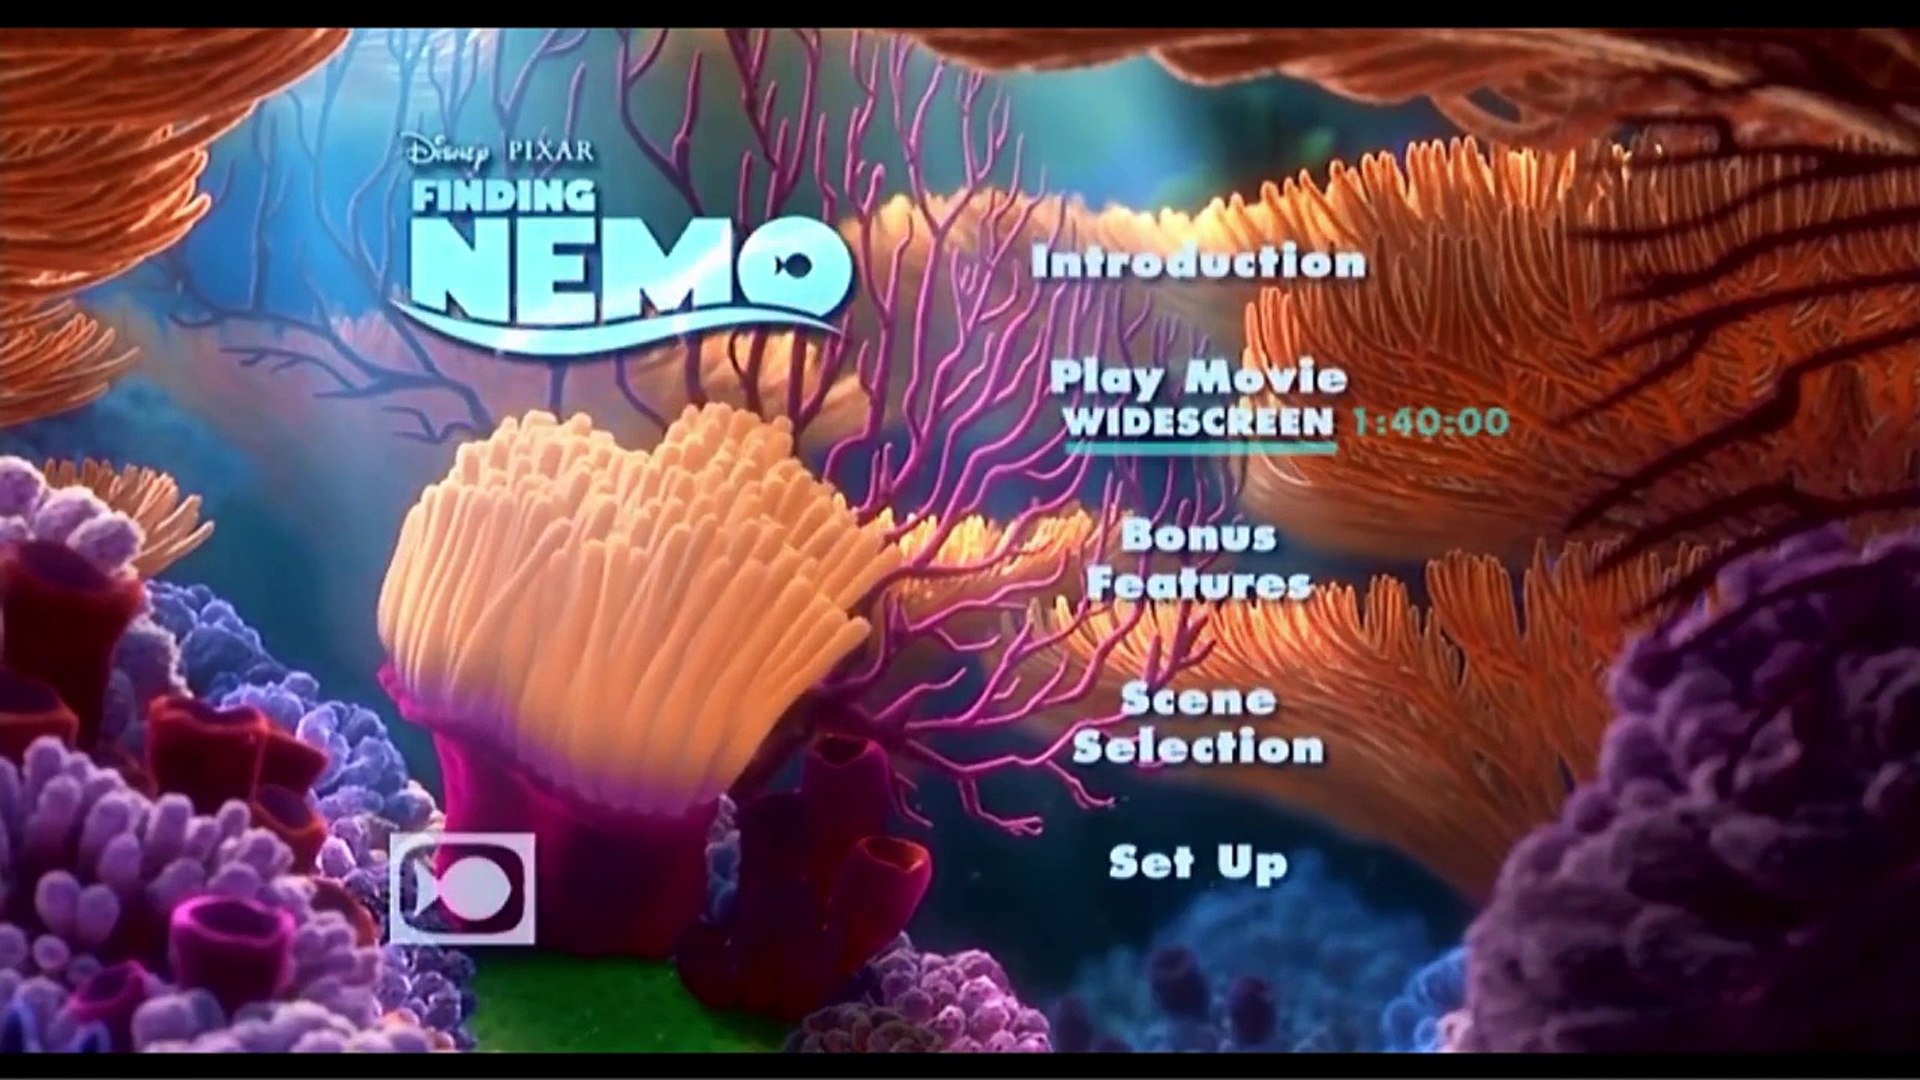 Still from the DVD menu of "Finding Nemo"